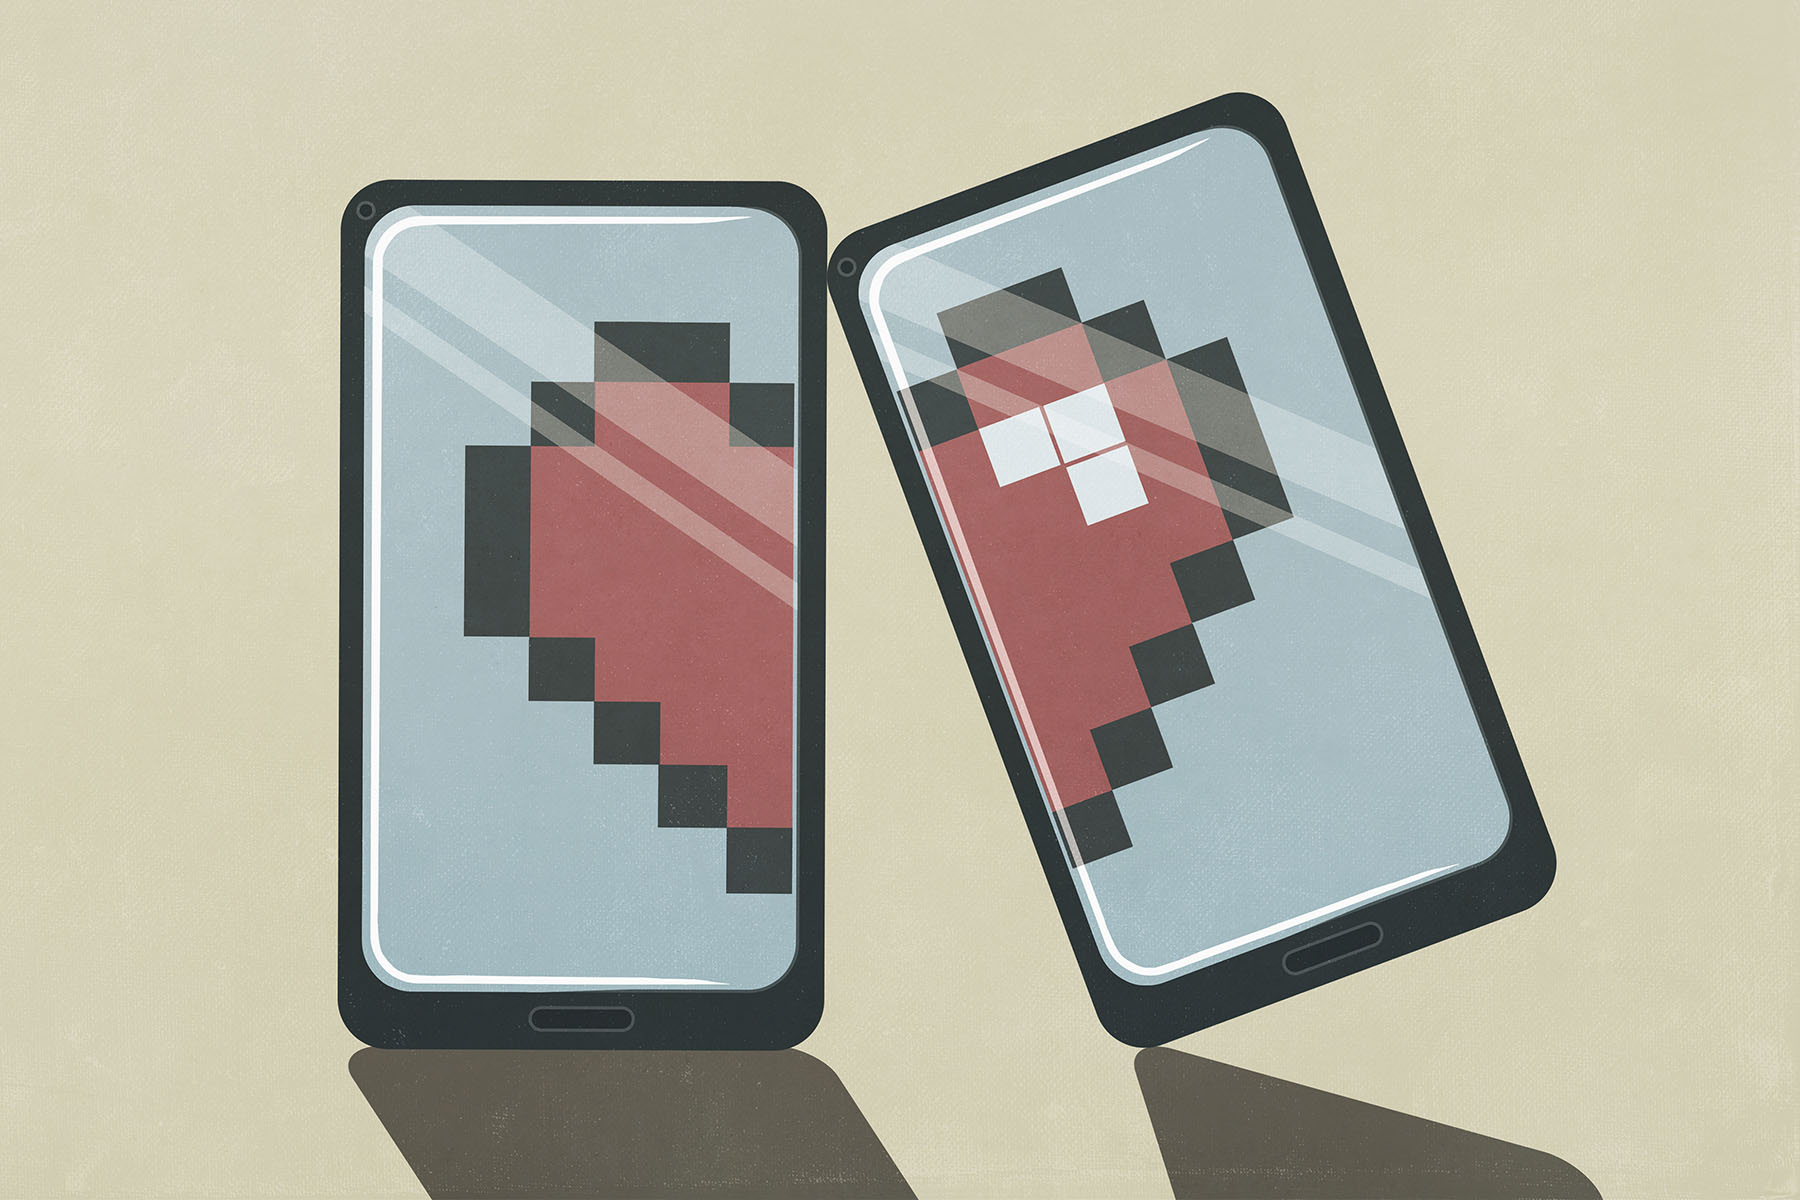 Illustration of pixelated broken heart on smart phone screens